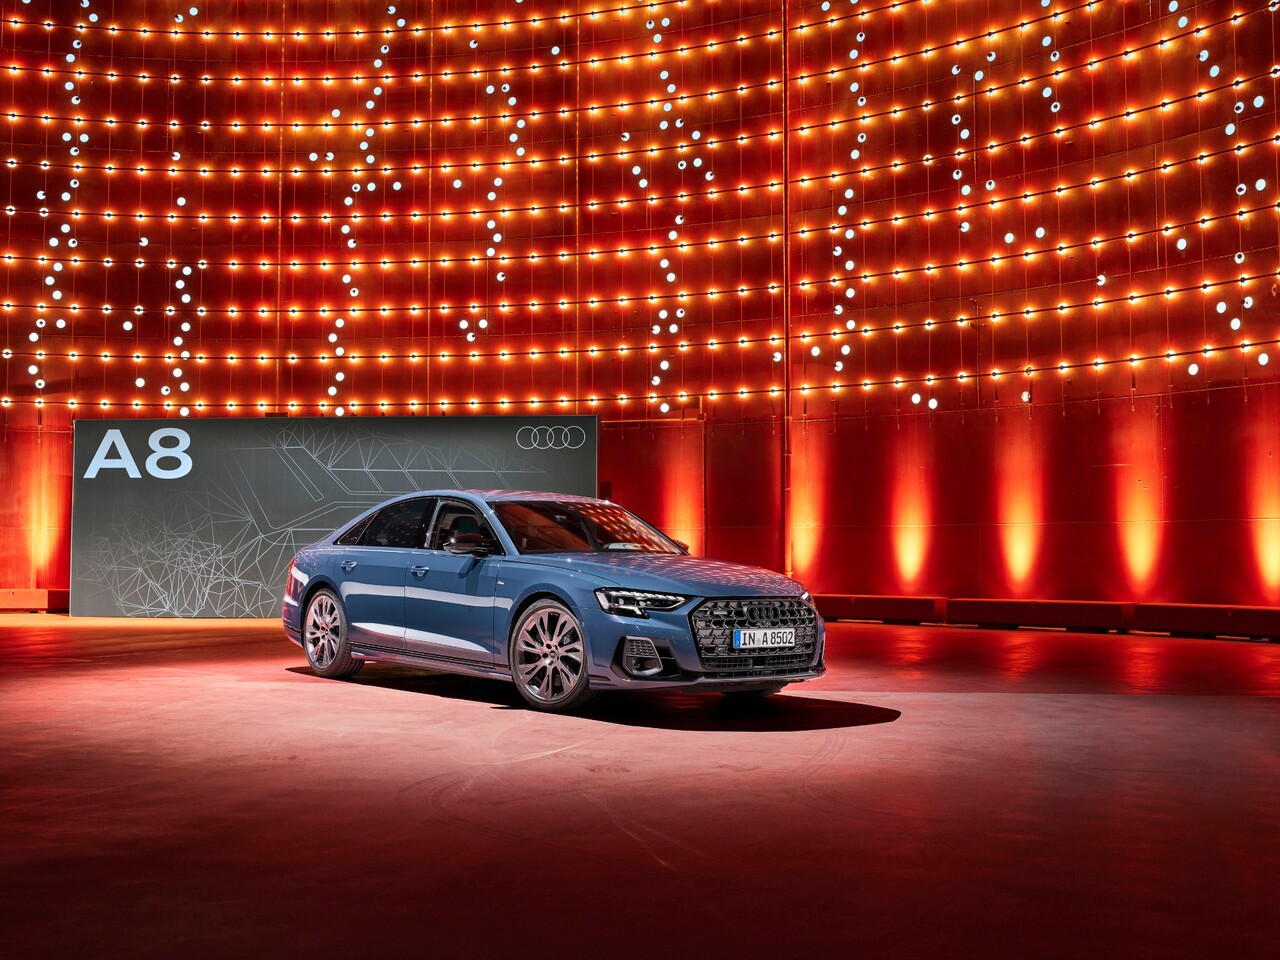 Audi Canarias se viste de gala para recibir al Nuevo Audi A8